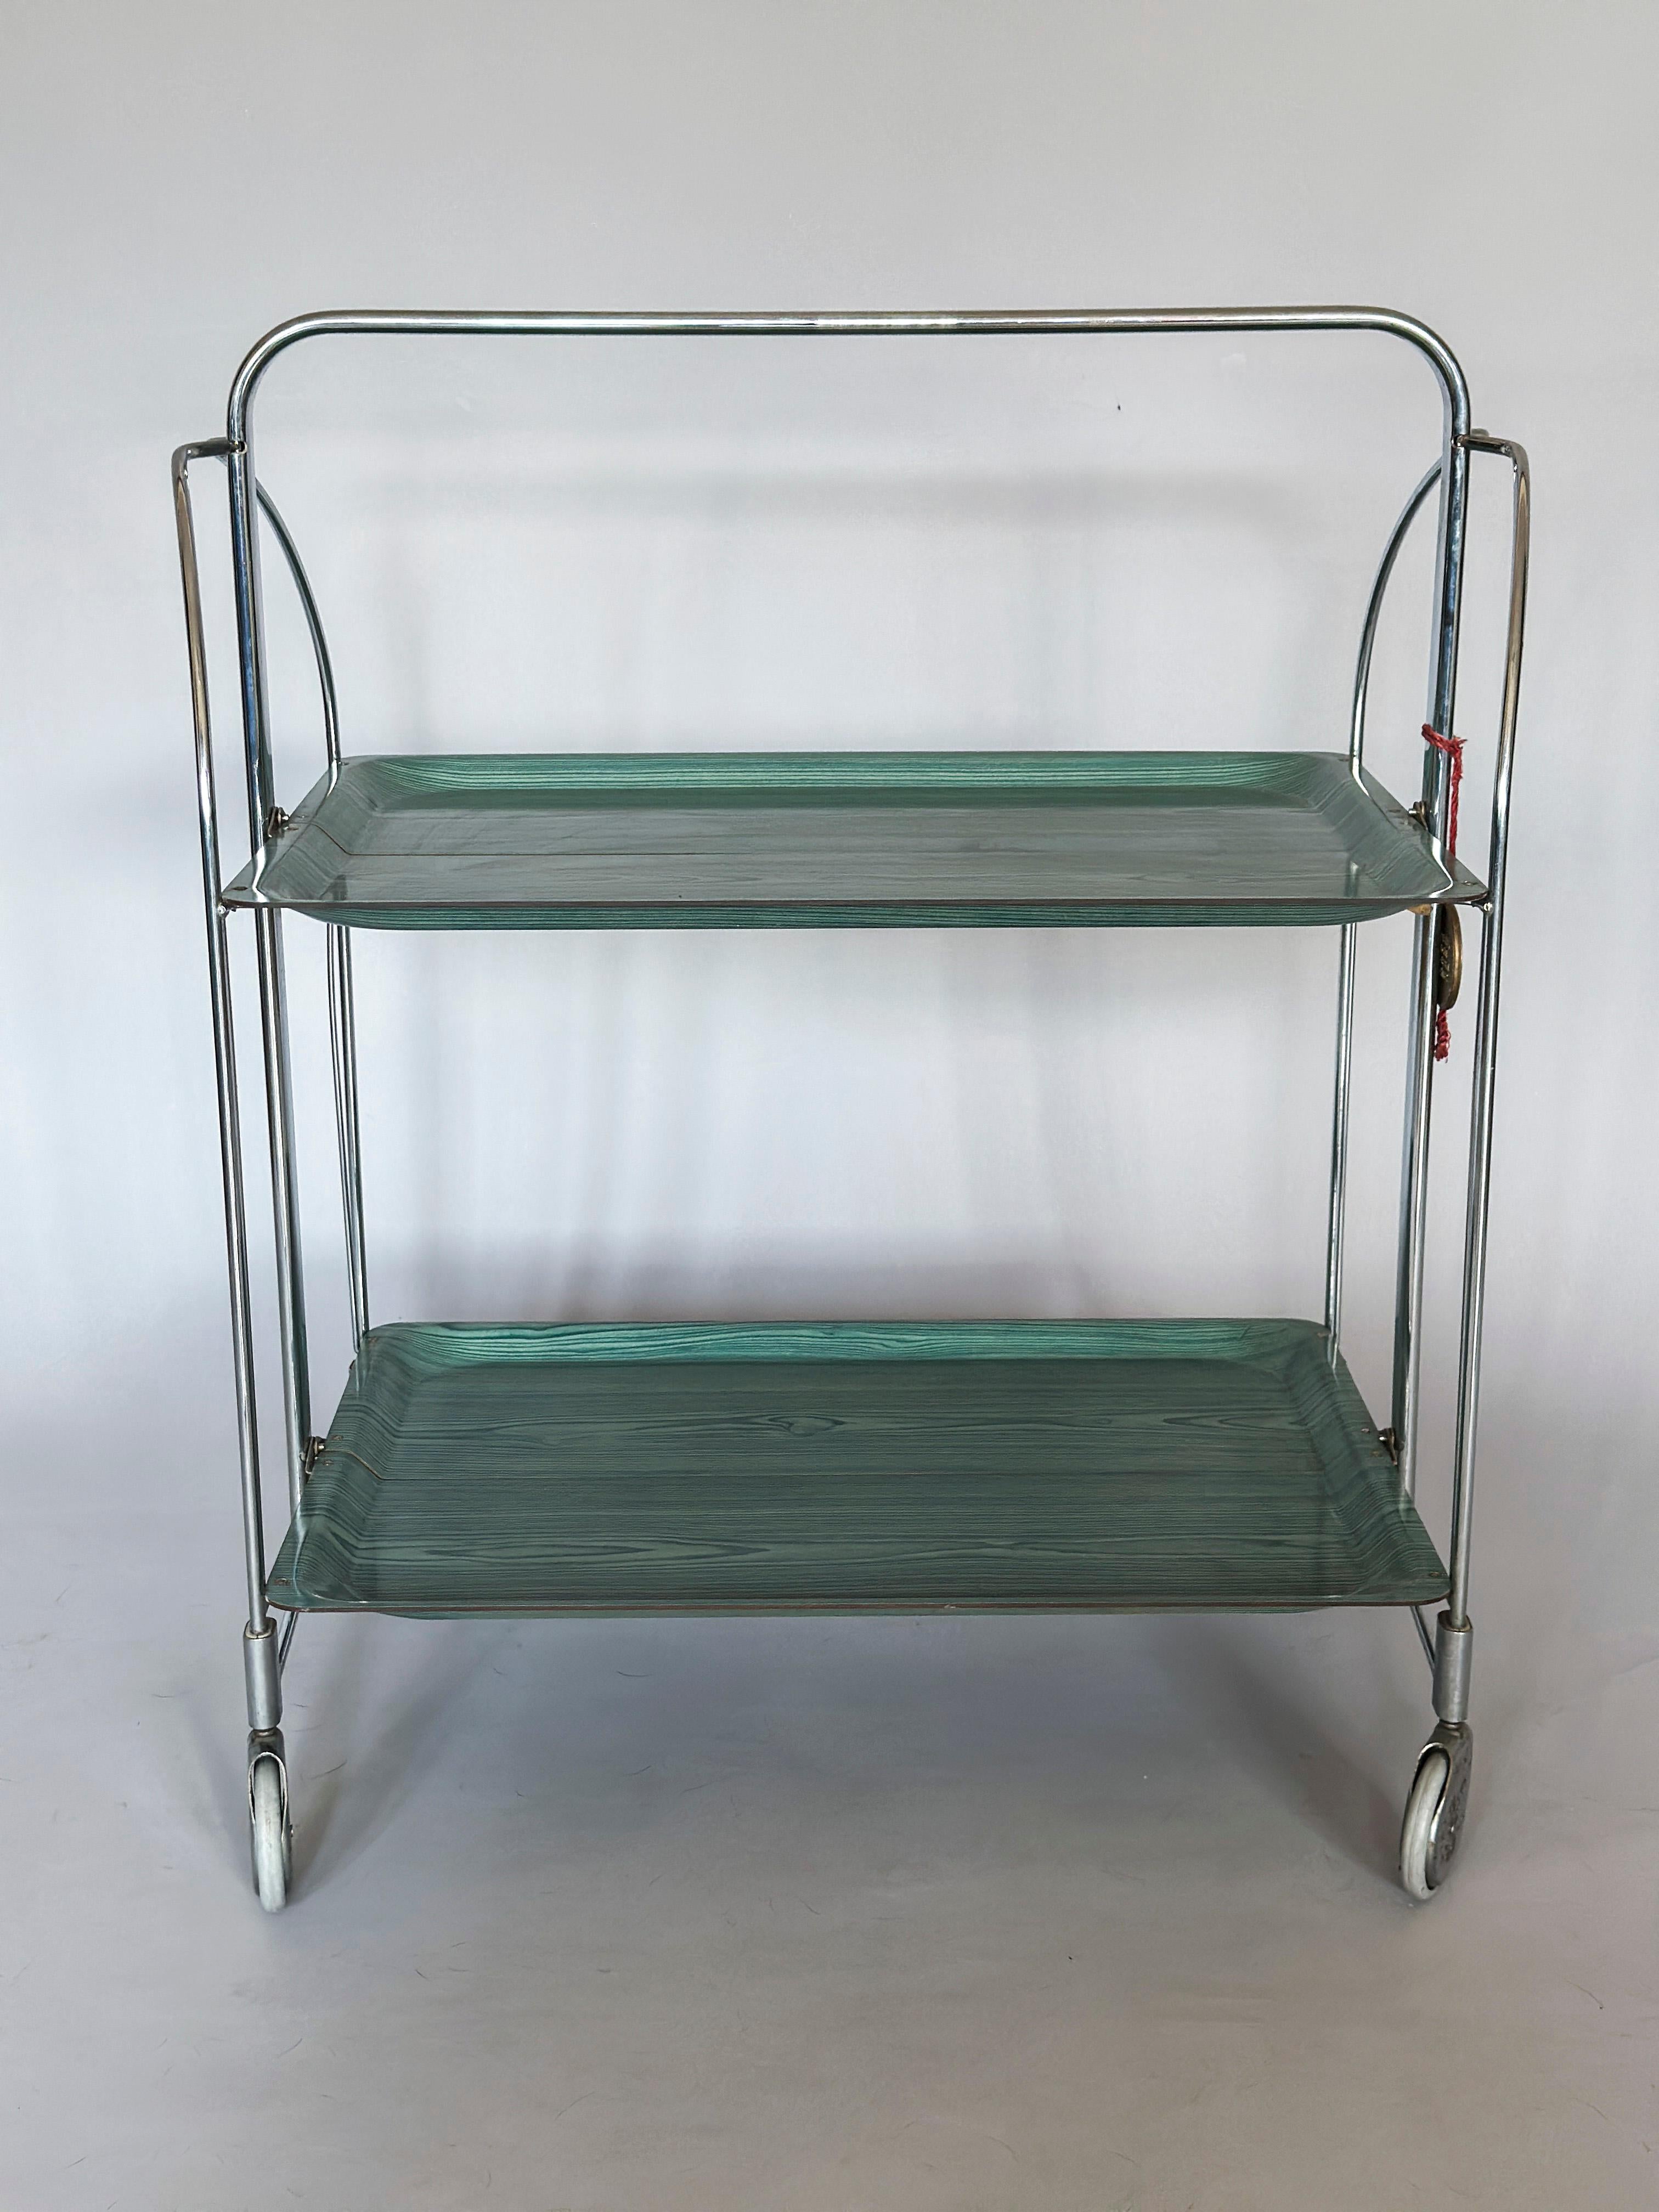 Chrome Mid-Century Modern Folding Bar Cart Trolley from Gerlinol For Sale